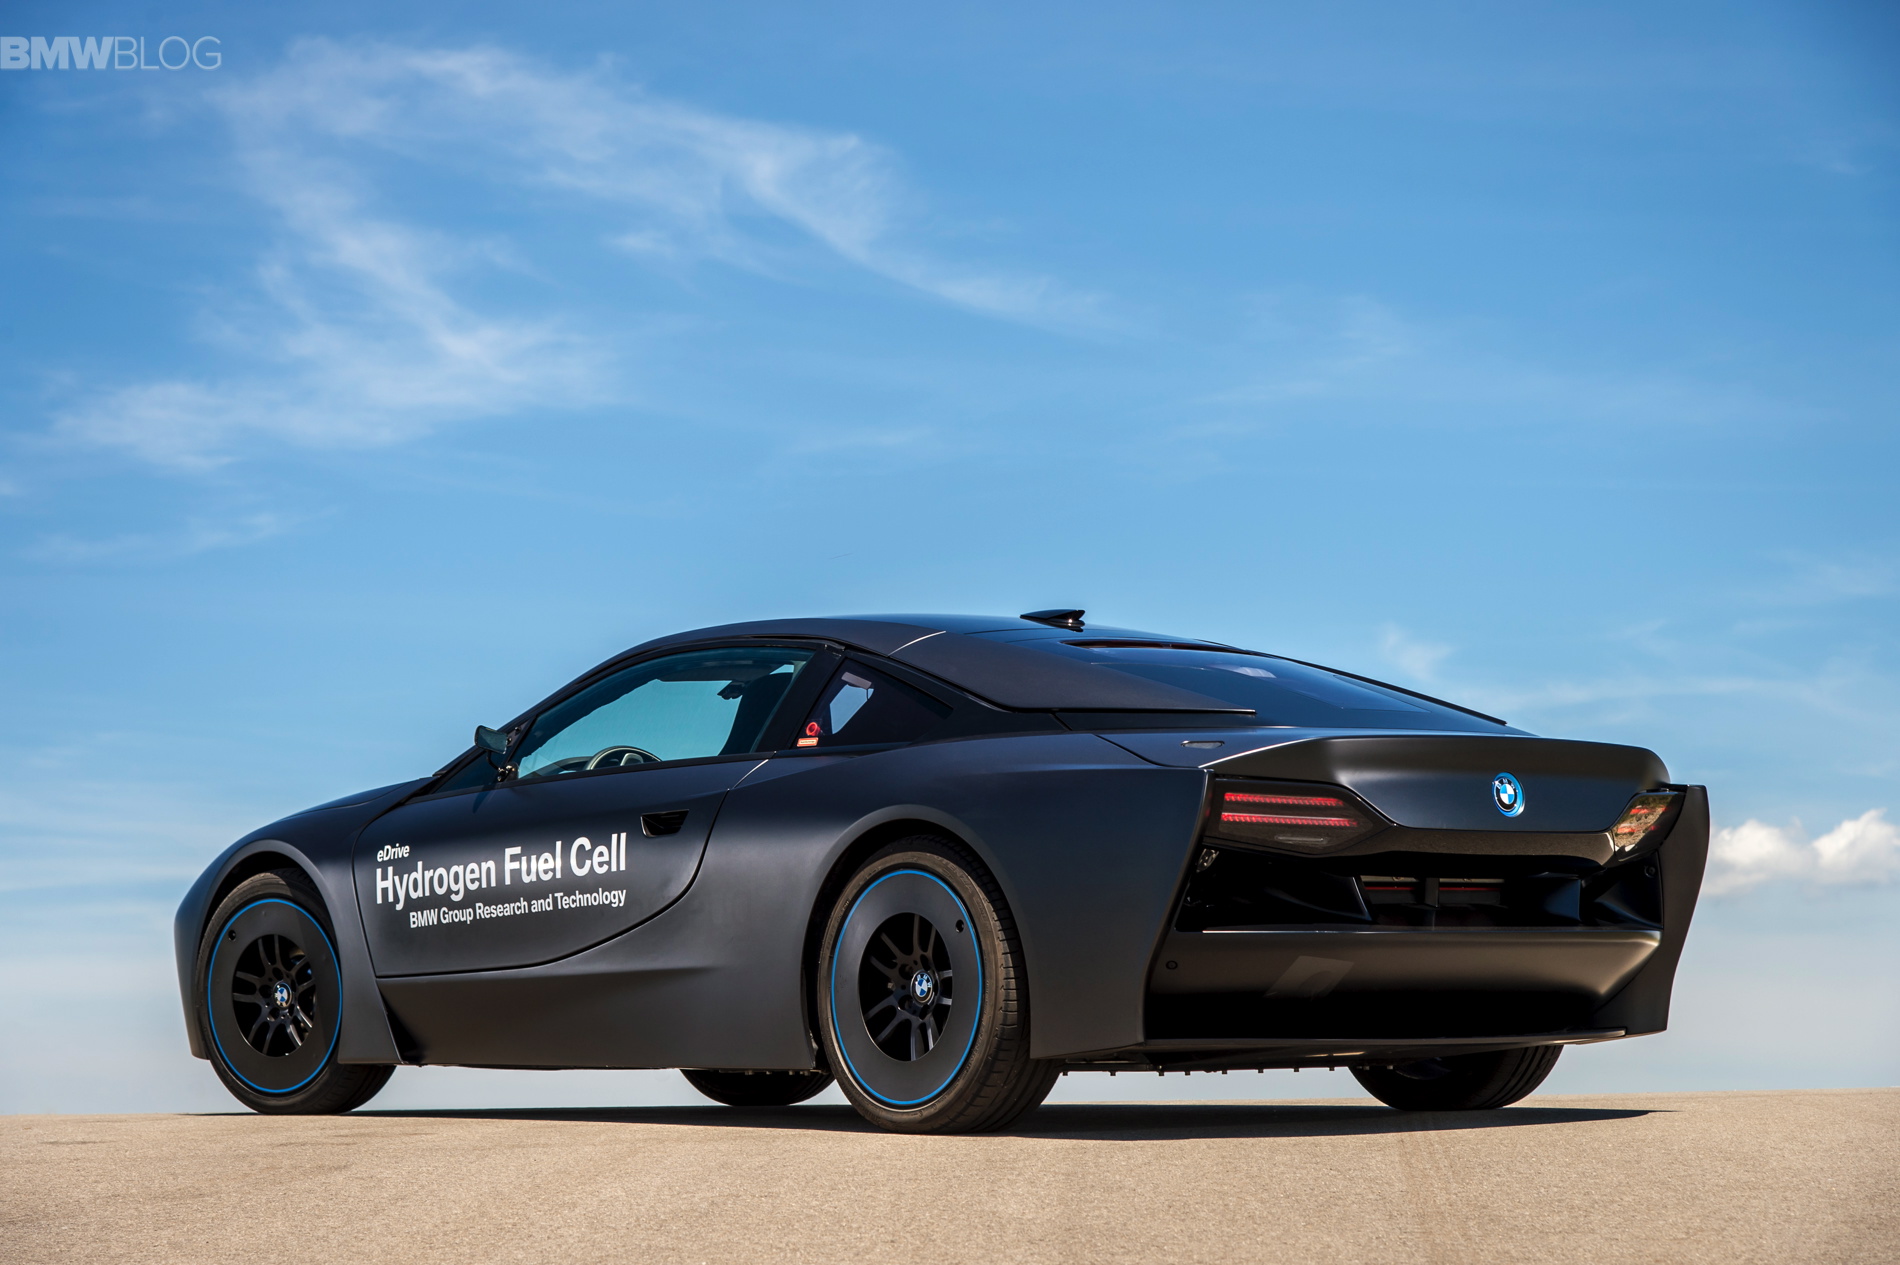 BMW i8 hydrogen fuel cell images 26